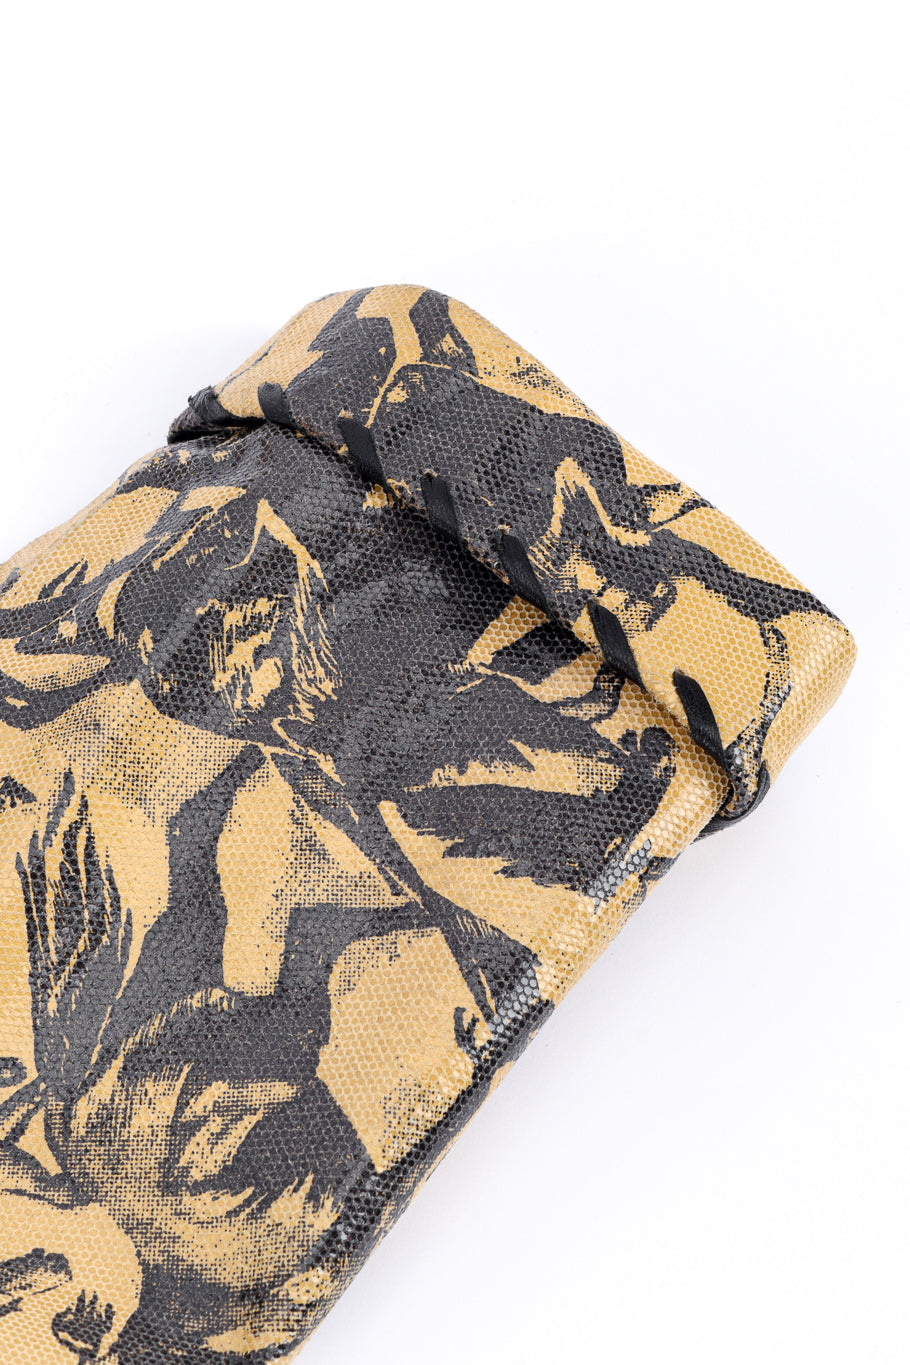 Vintage Leather Renditions by Sandi Horse Print Leather Fringe Blazer sleeve closeup @recessla